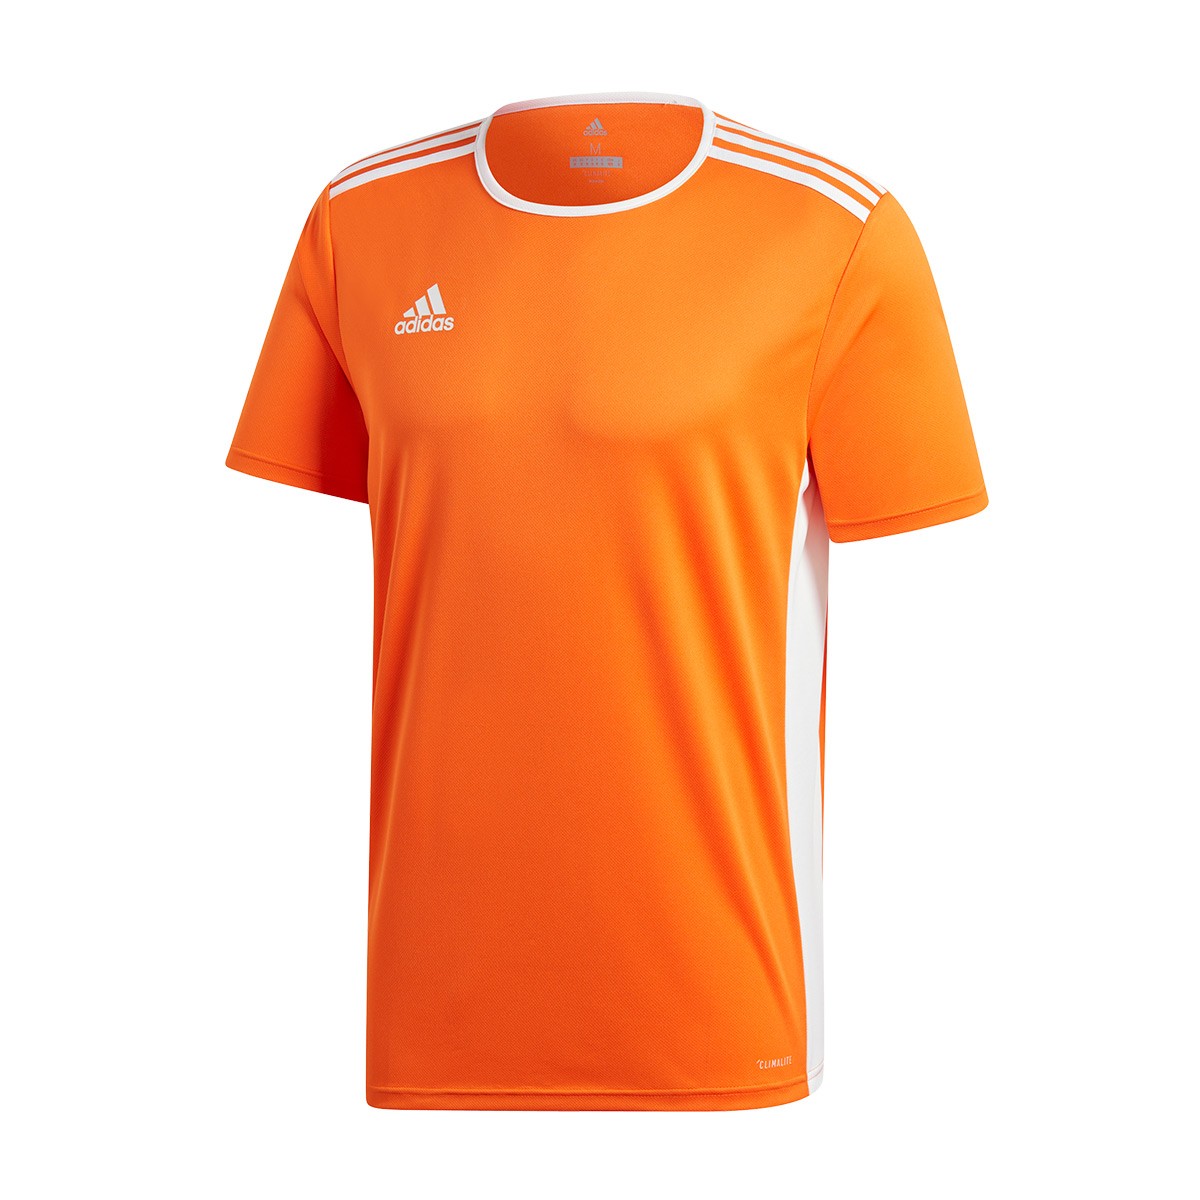 Jersey adidas Entrada 18 m/c Orange-White - Football store Fútbol Emotion